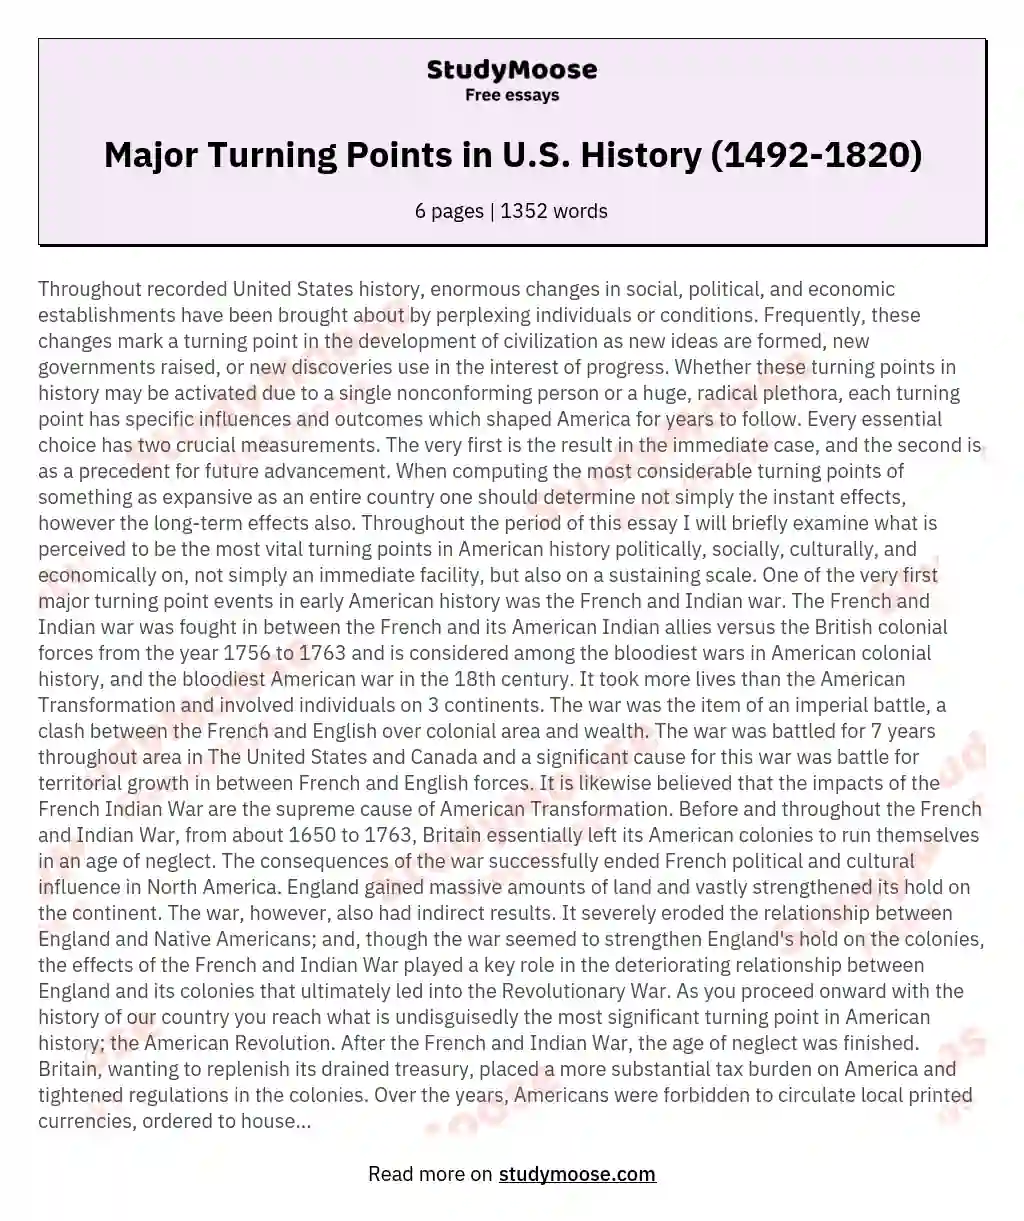 Major Turning Points in U.S. History (1492-1820) essay